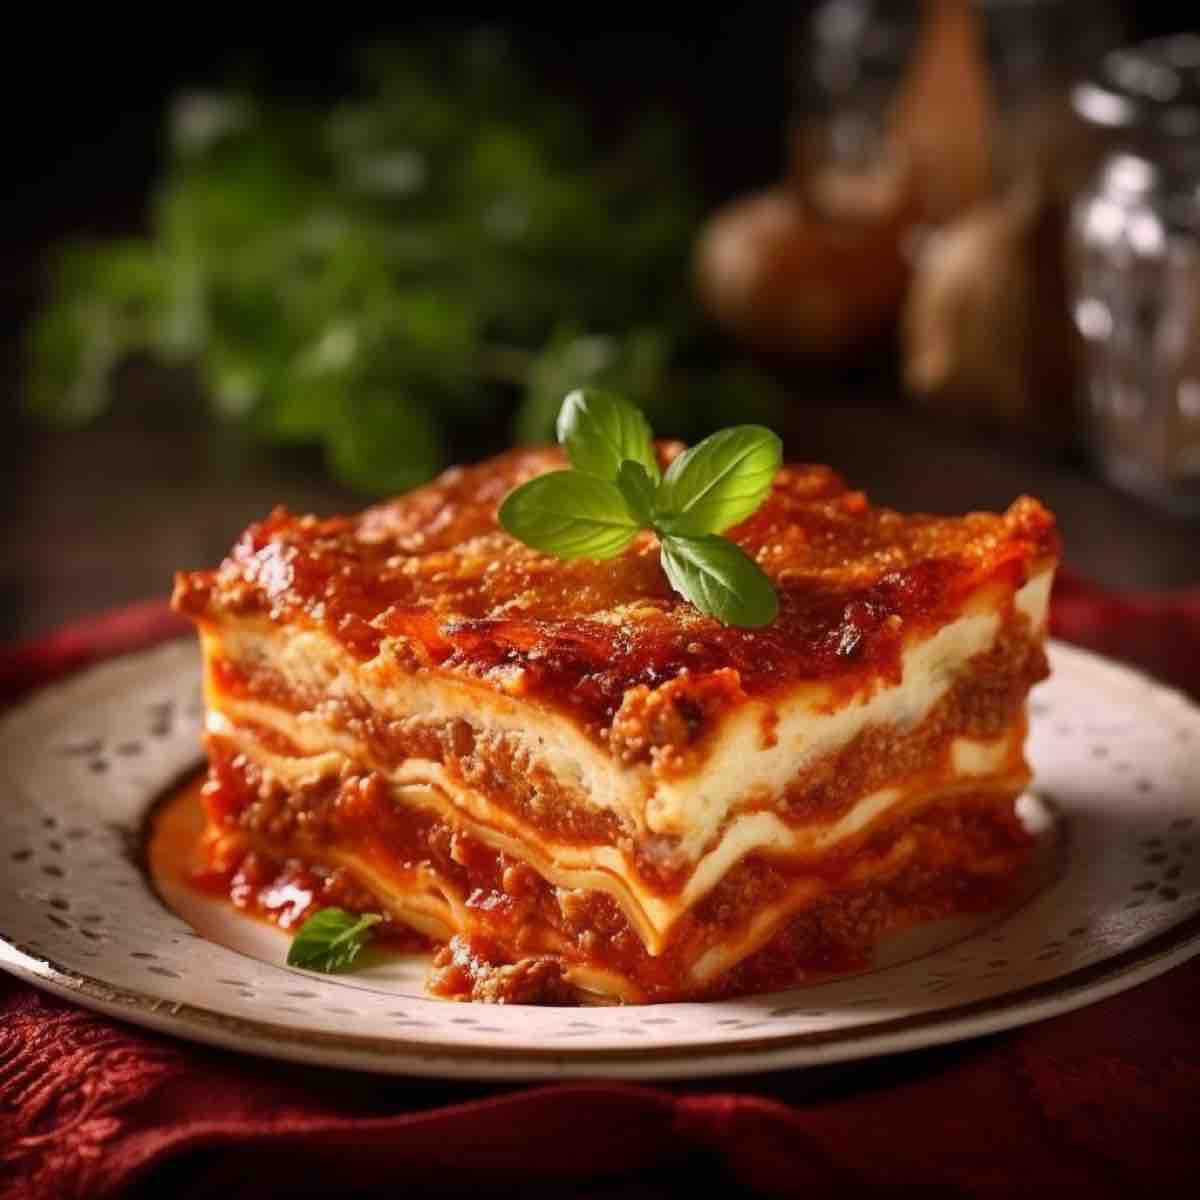 Discover egg substitutes for delicious lasagna recipes